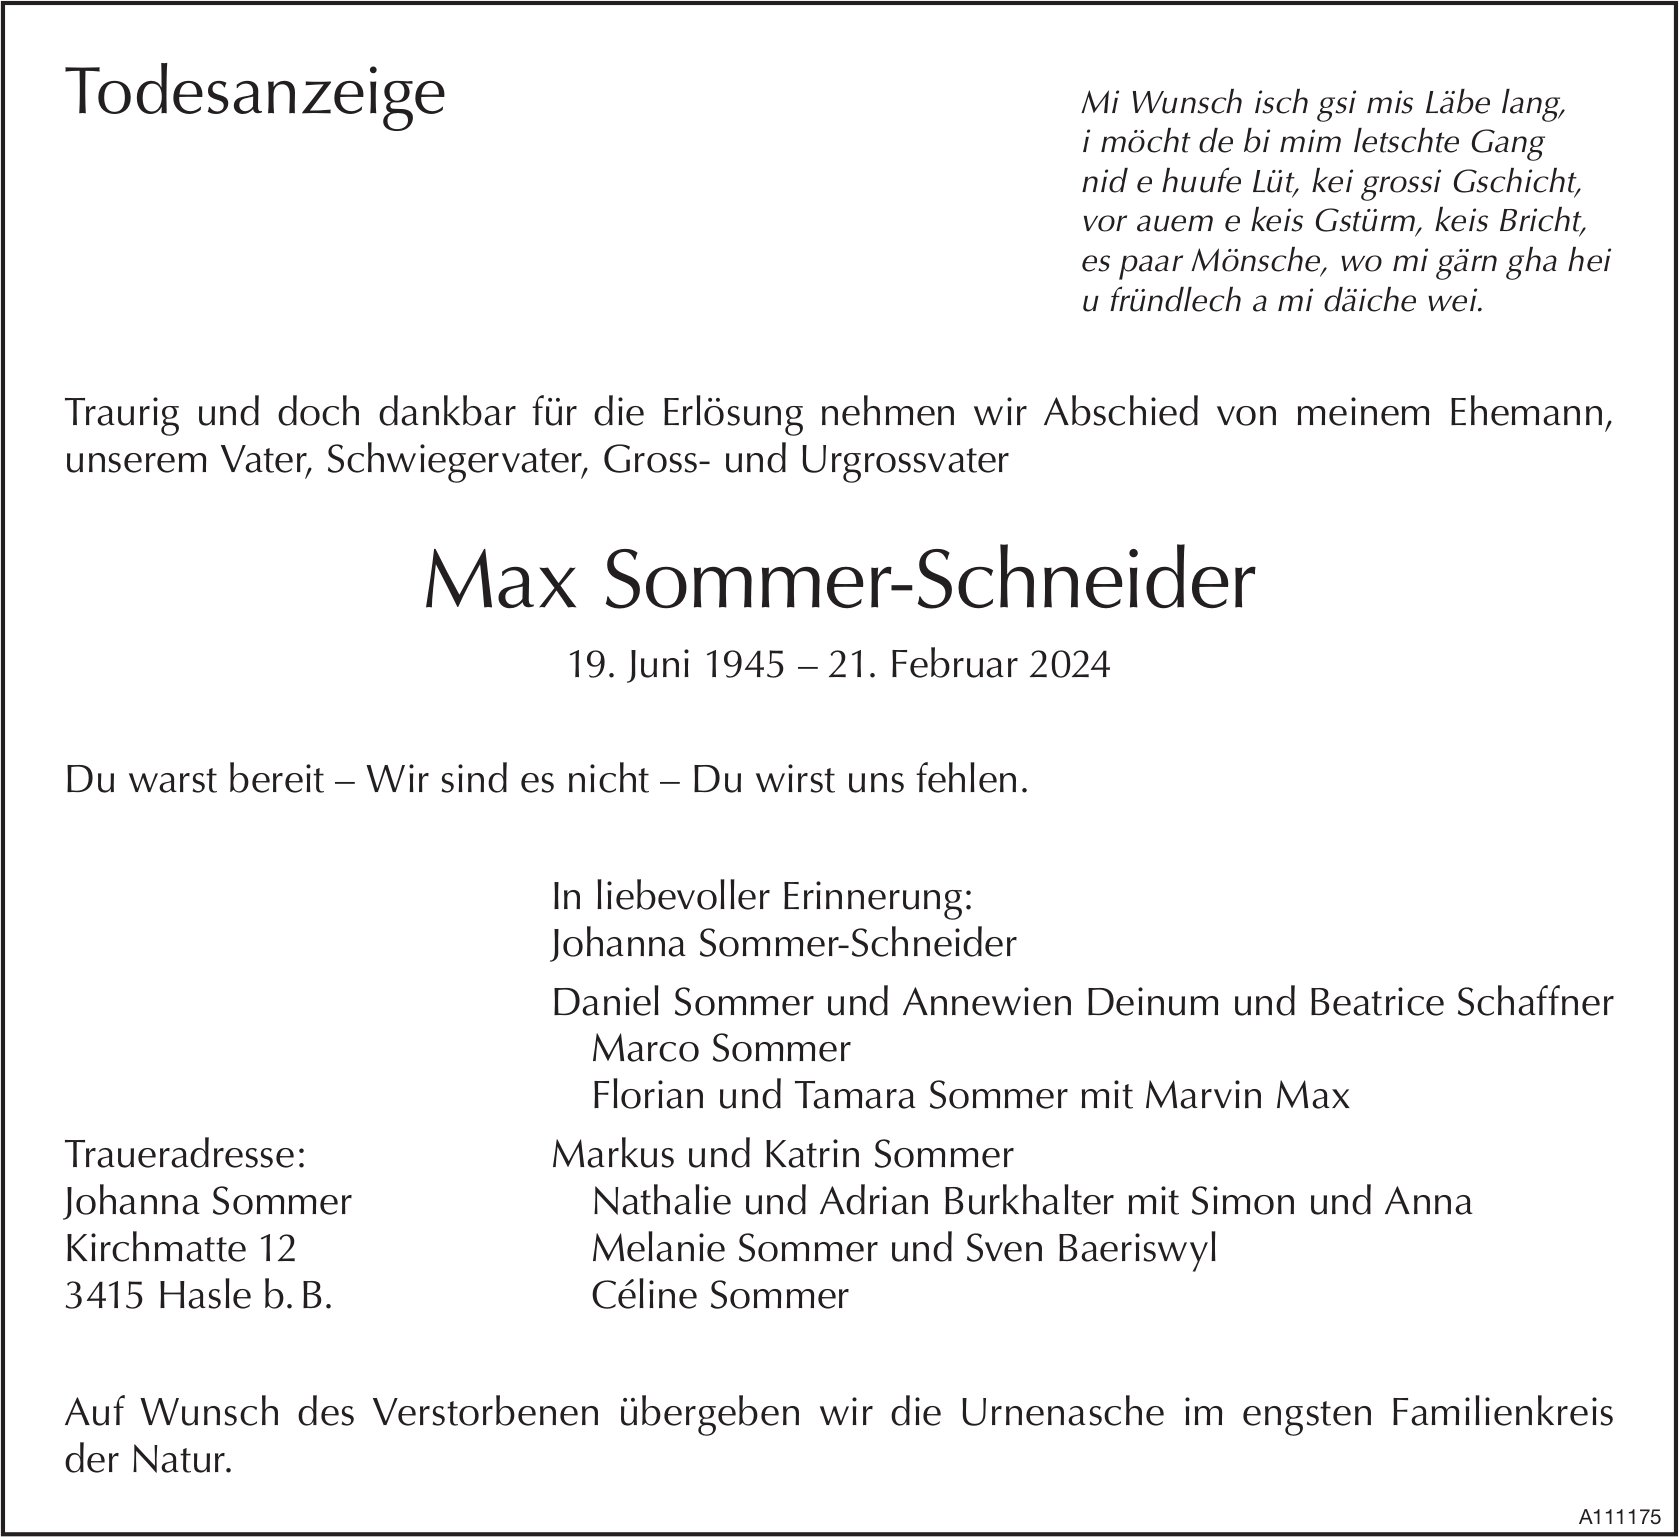 Max Sommer-Schneider, Februar 2024 / TA